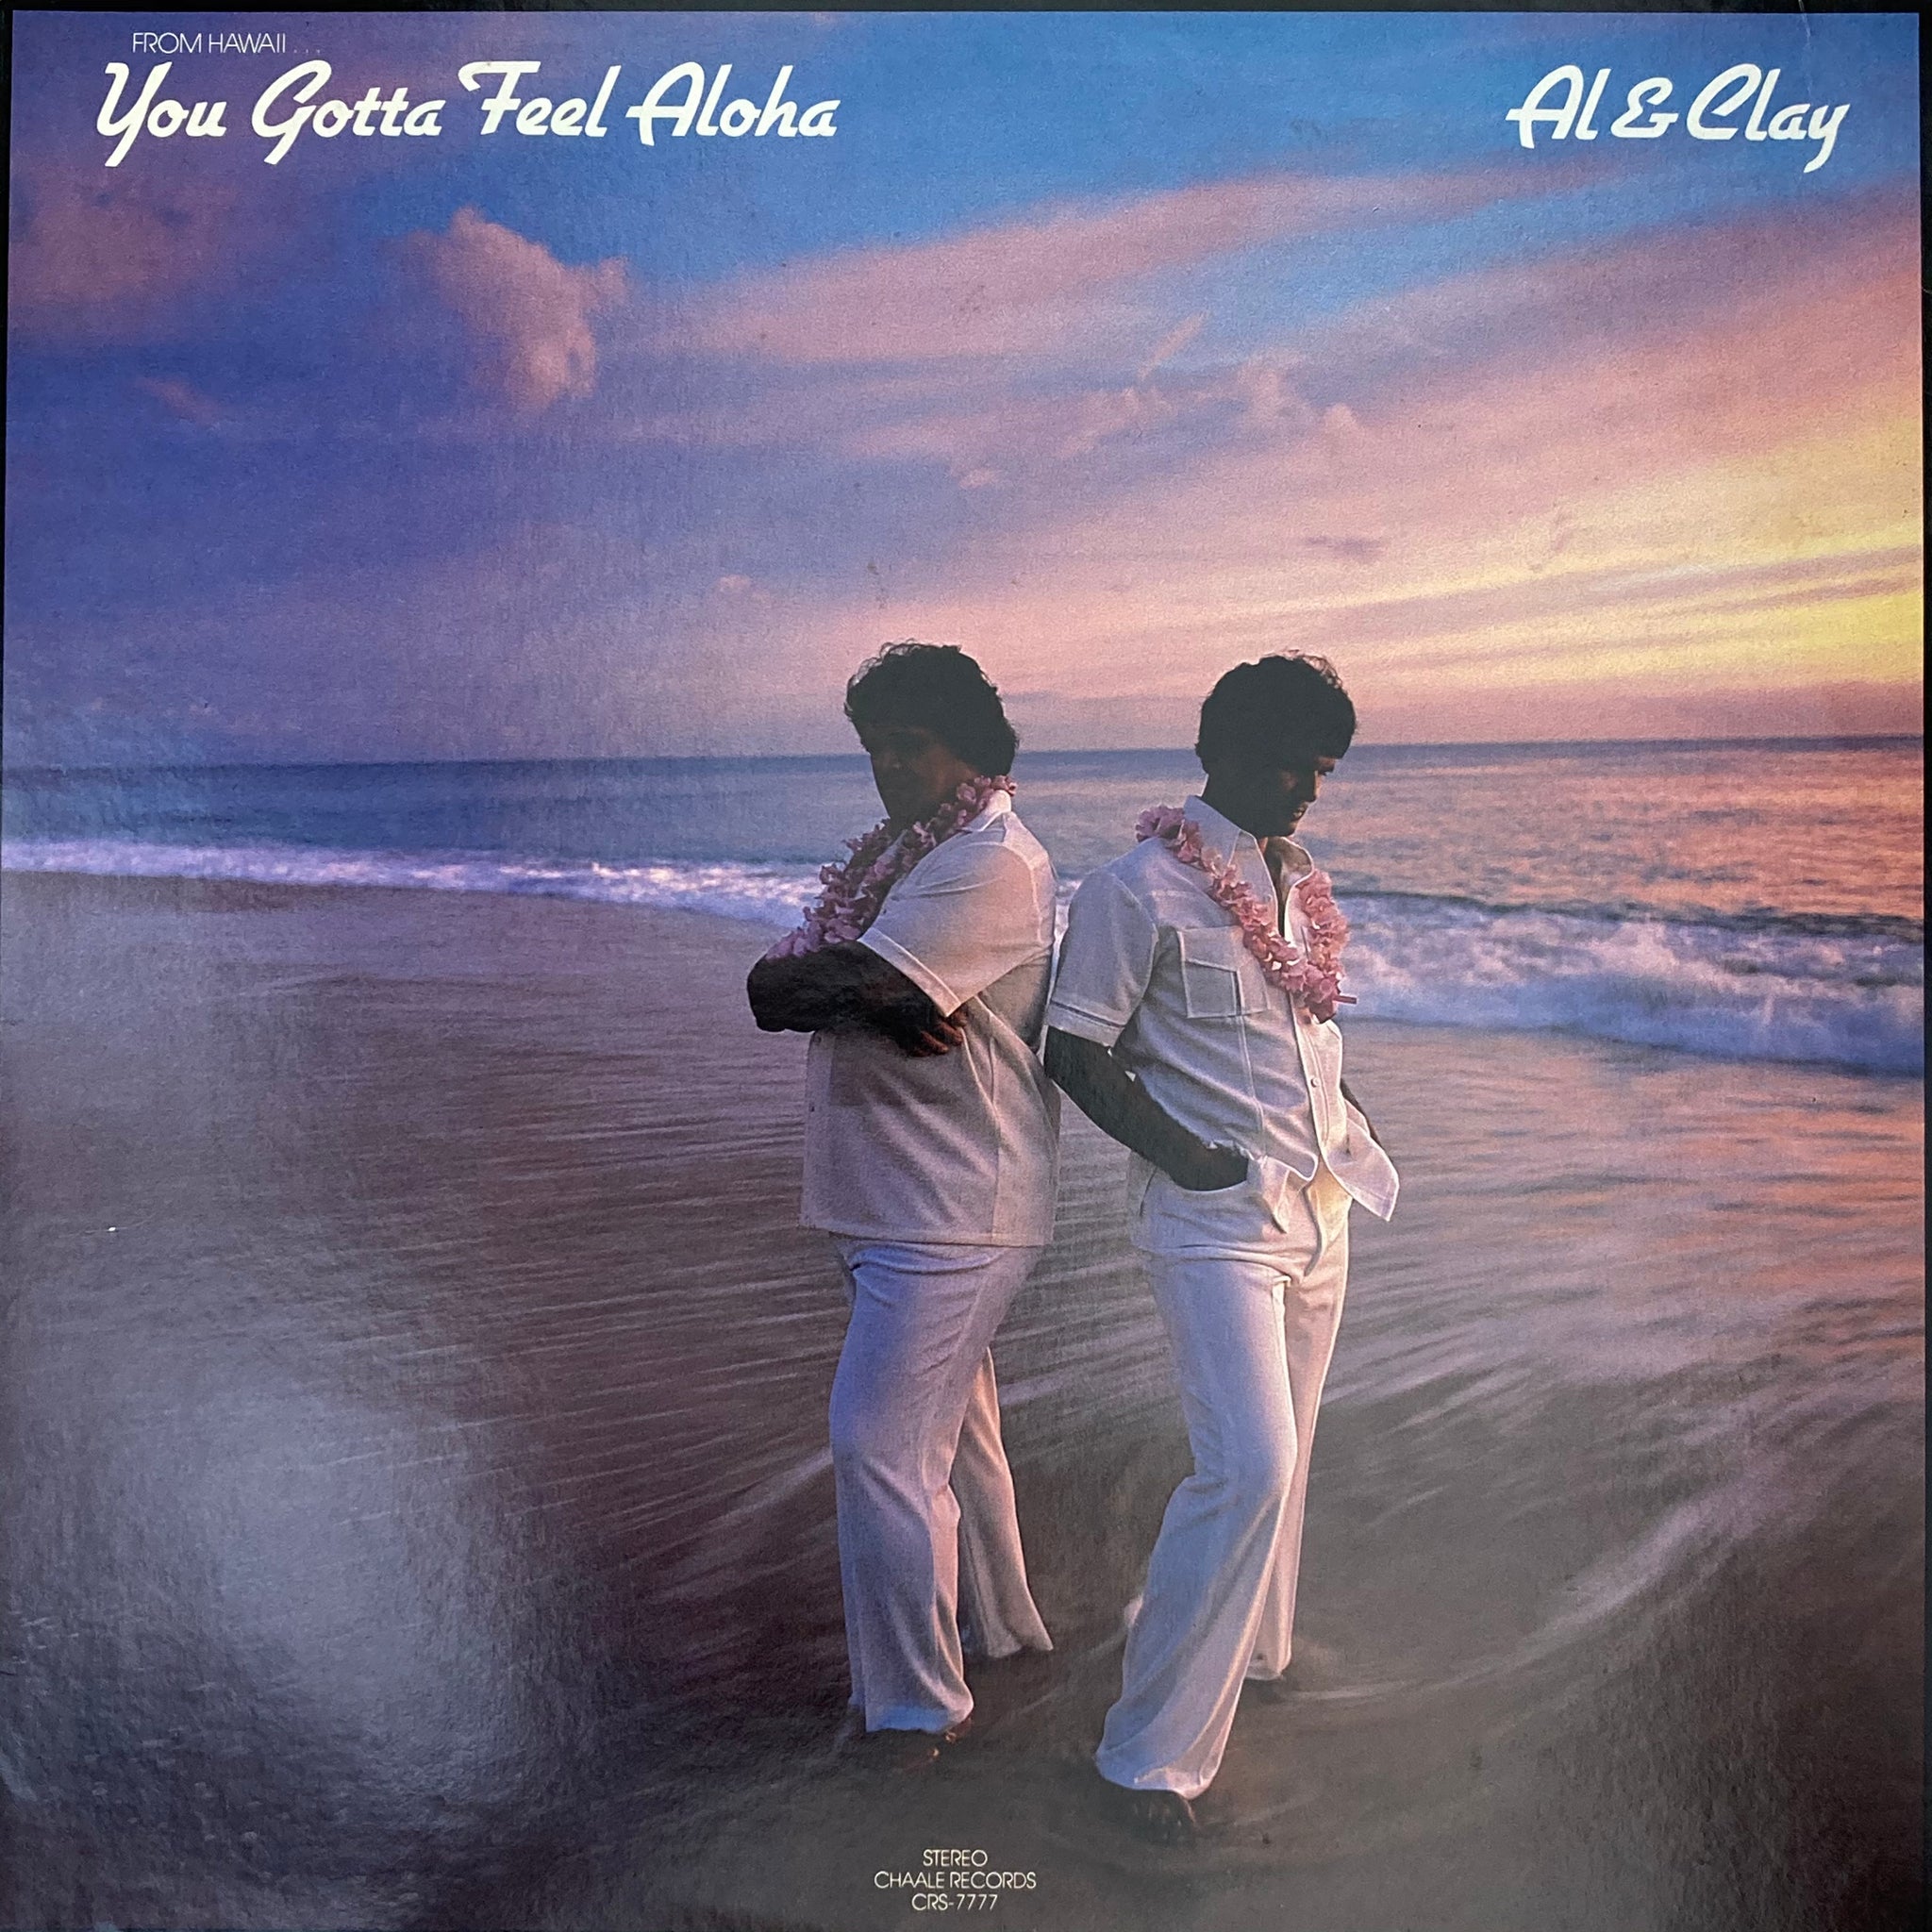 Al & Clay - You Gotta Feel Aloha